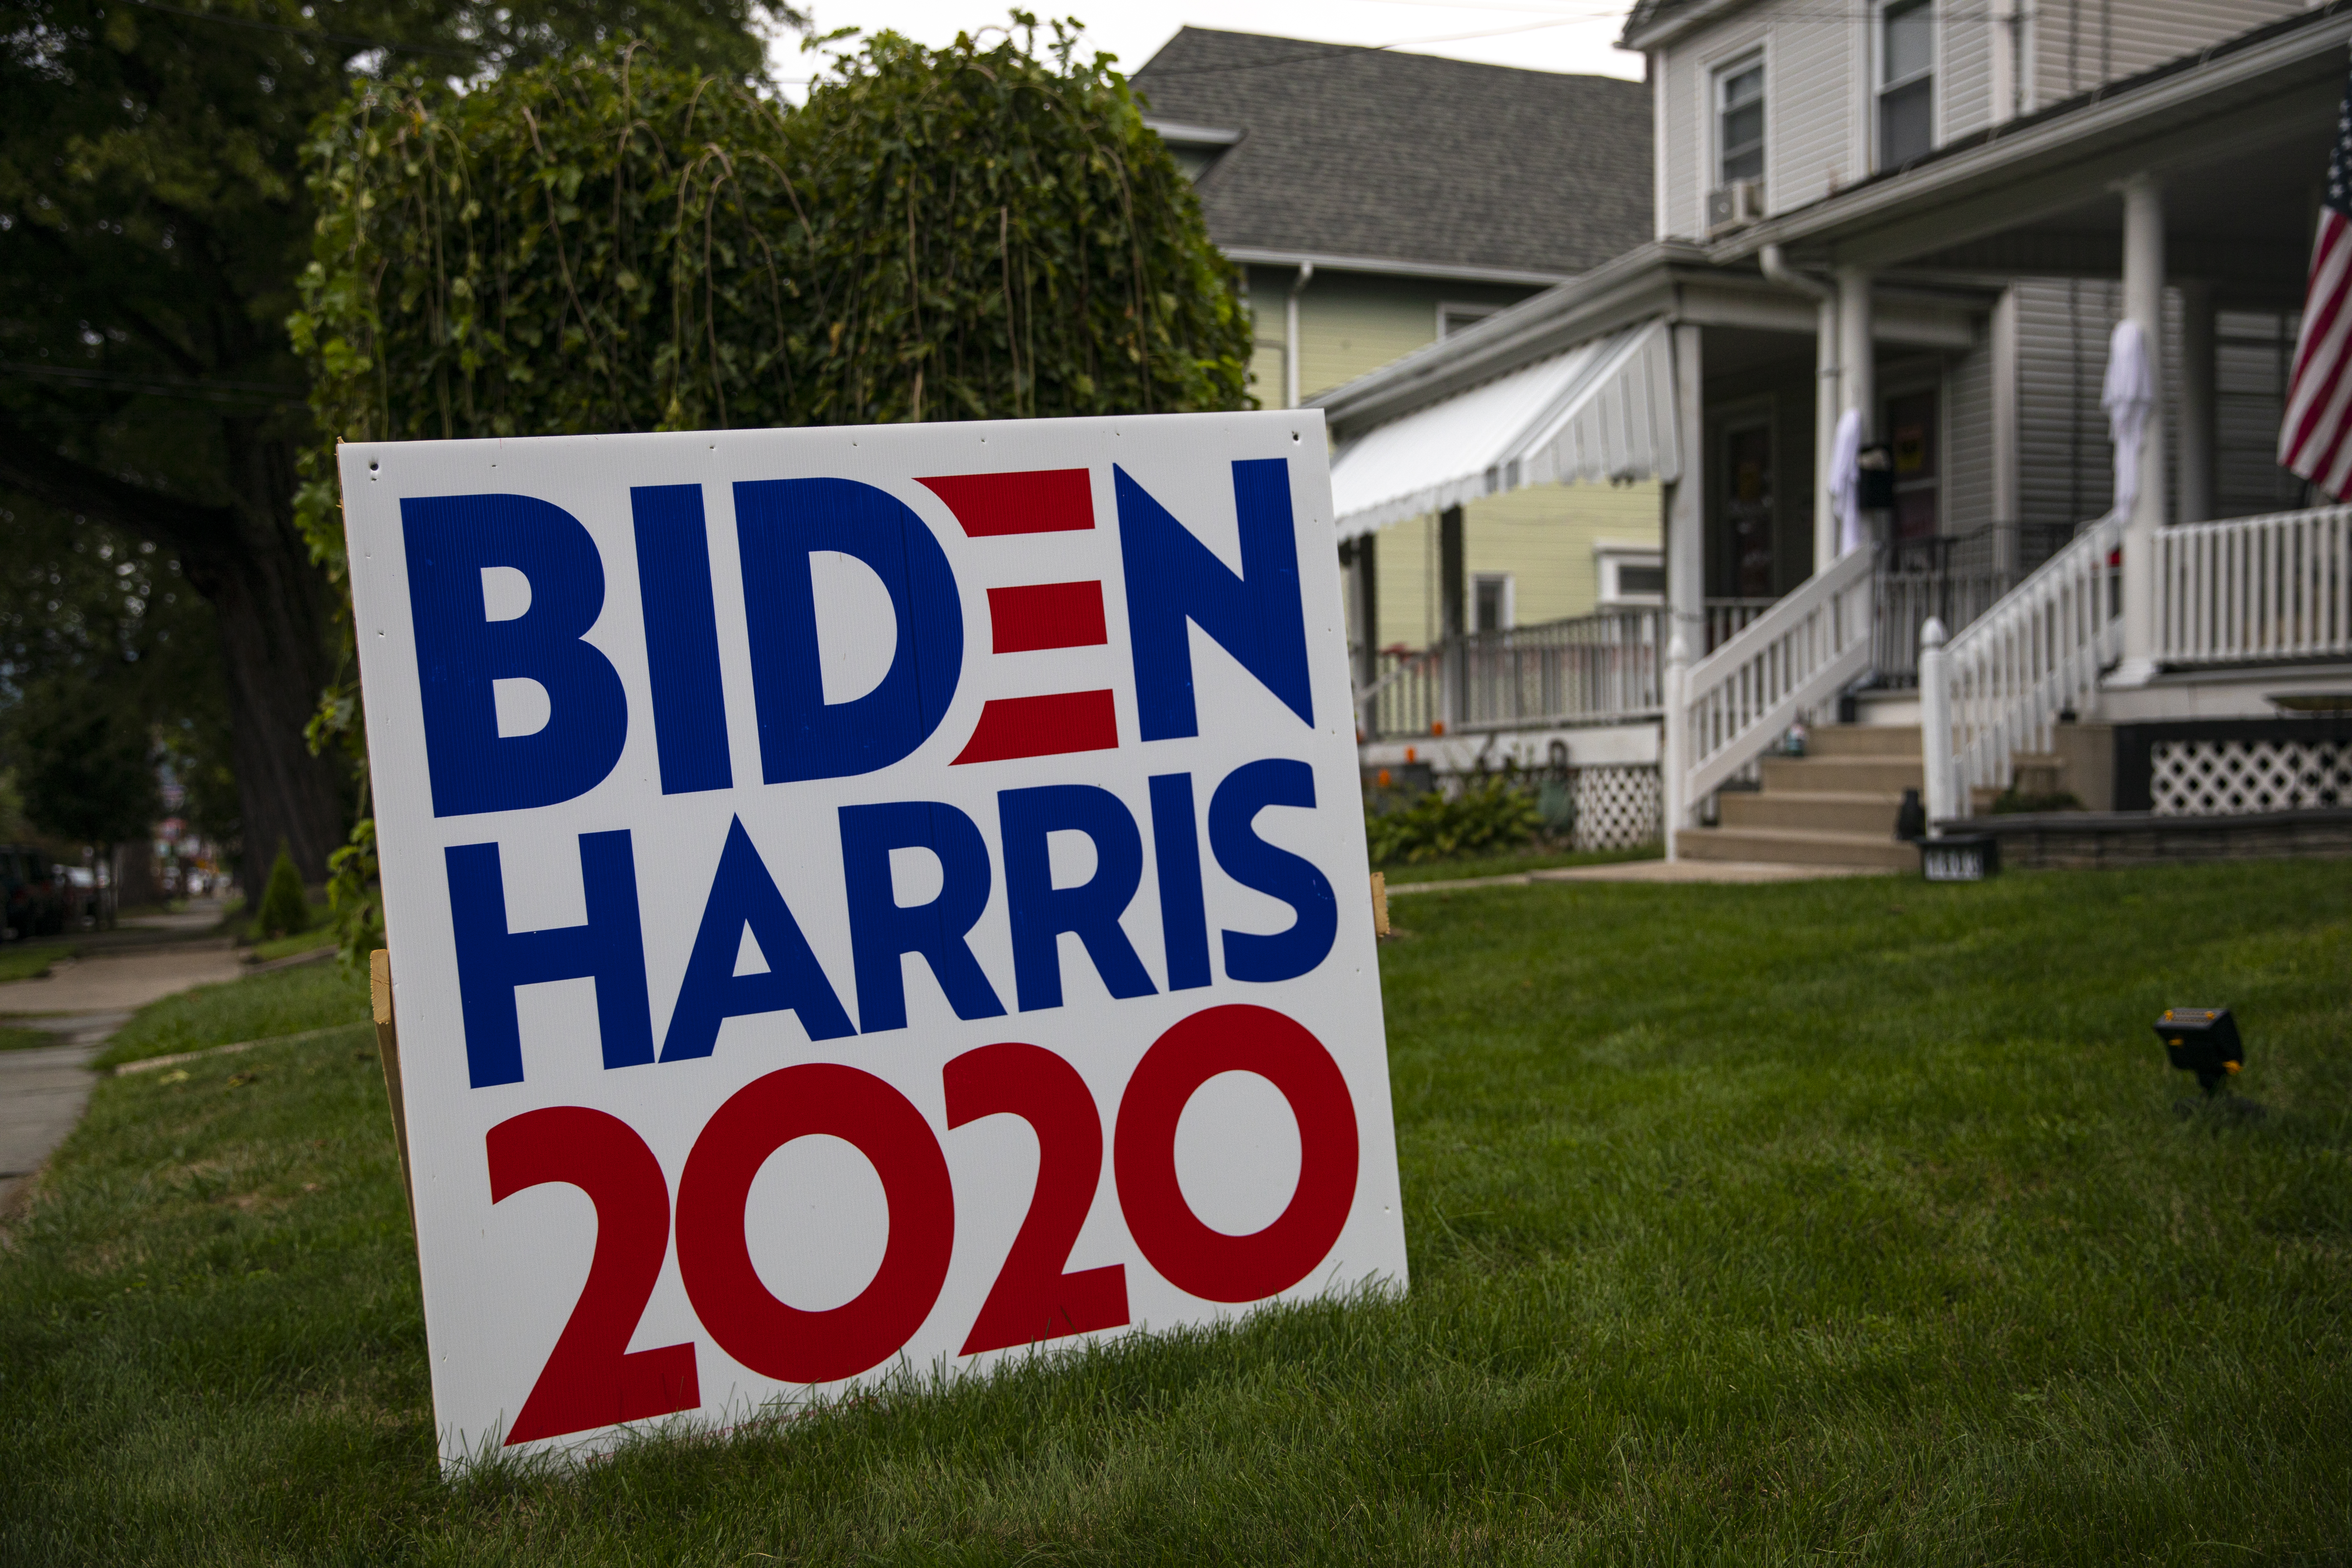 Unhinged Karen threatens neighbor over Biden/Harris lawn sign in electric video